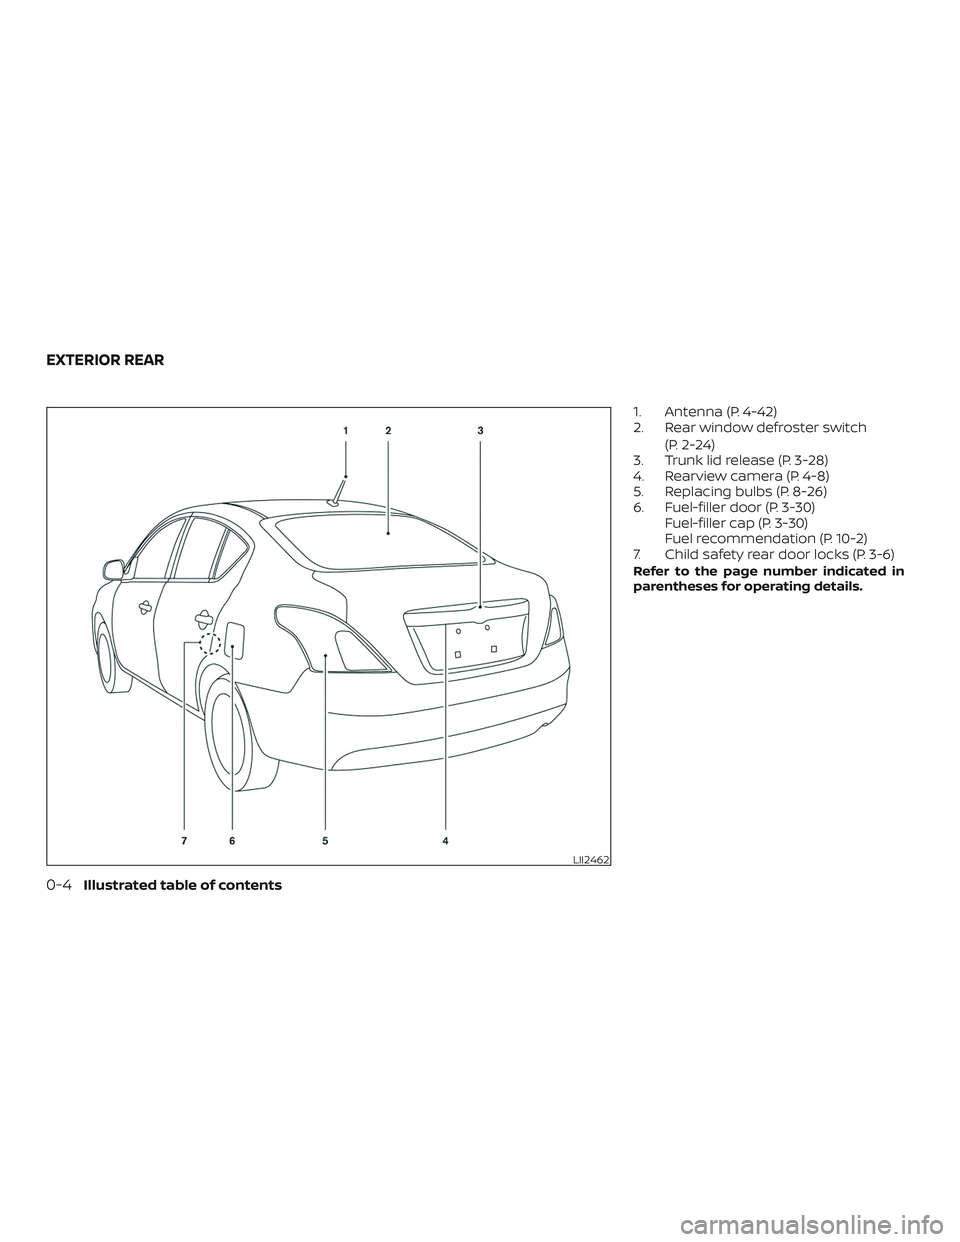 NISSAN VERSA 2019  Owners Manual 1. Antenna (P. 4-42)
2. Rear window defroster switch(P. 2-24)
3. Trunk lid release (P. 3-28)
4. Rearview camera (P. 4-8)
5. Replacing bulbs (P. 8-26)
6. Fuel-filler door (P. 3-30) Fuel-filler cap (P. 